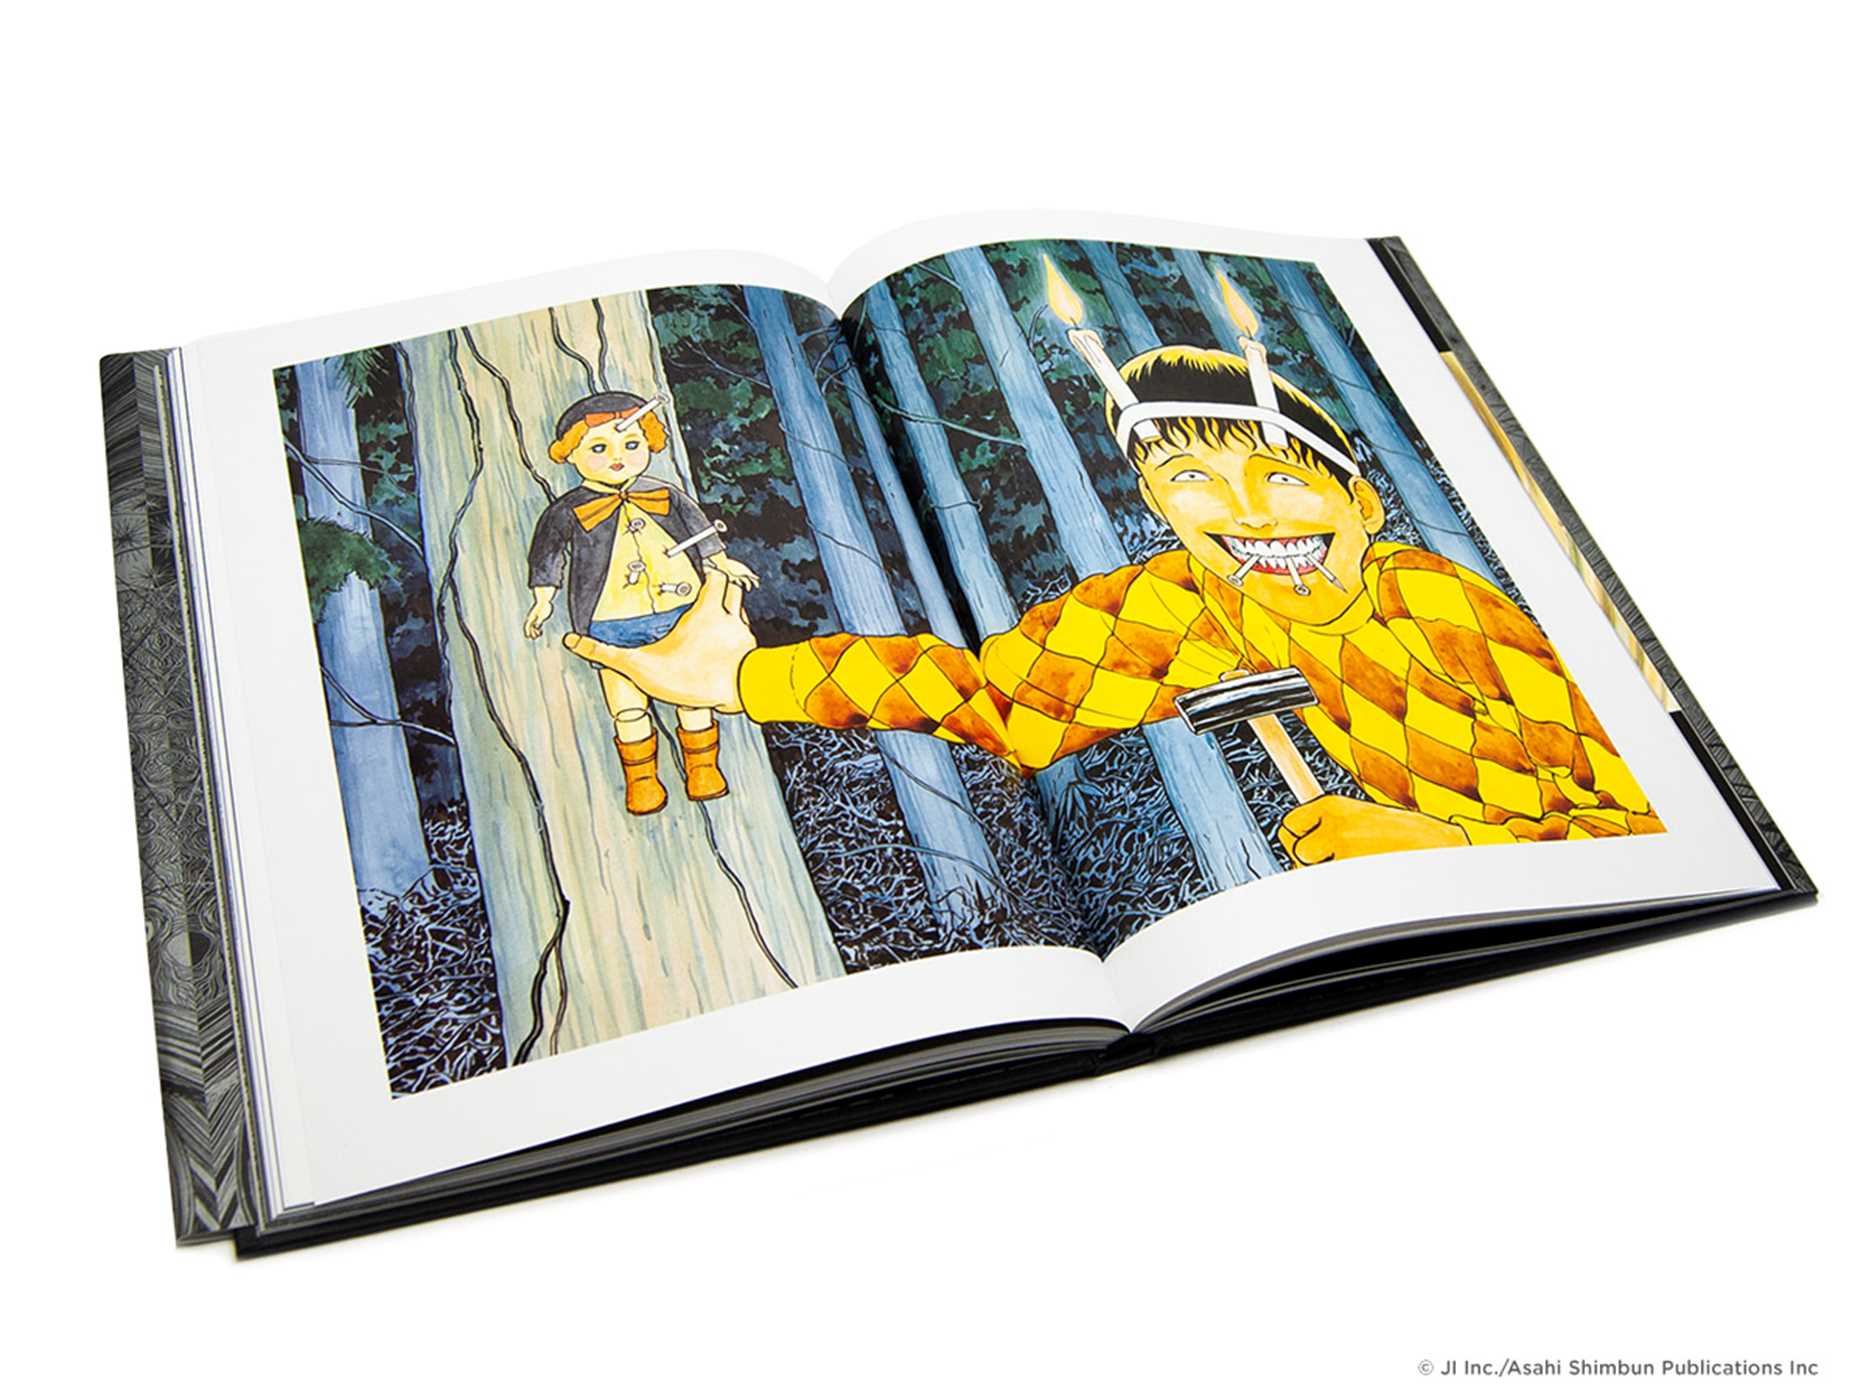 Art Book: Twisted Visions: The Art of Junji Ito